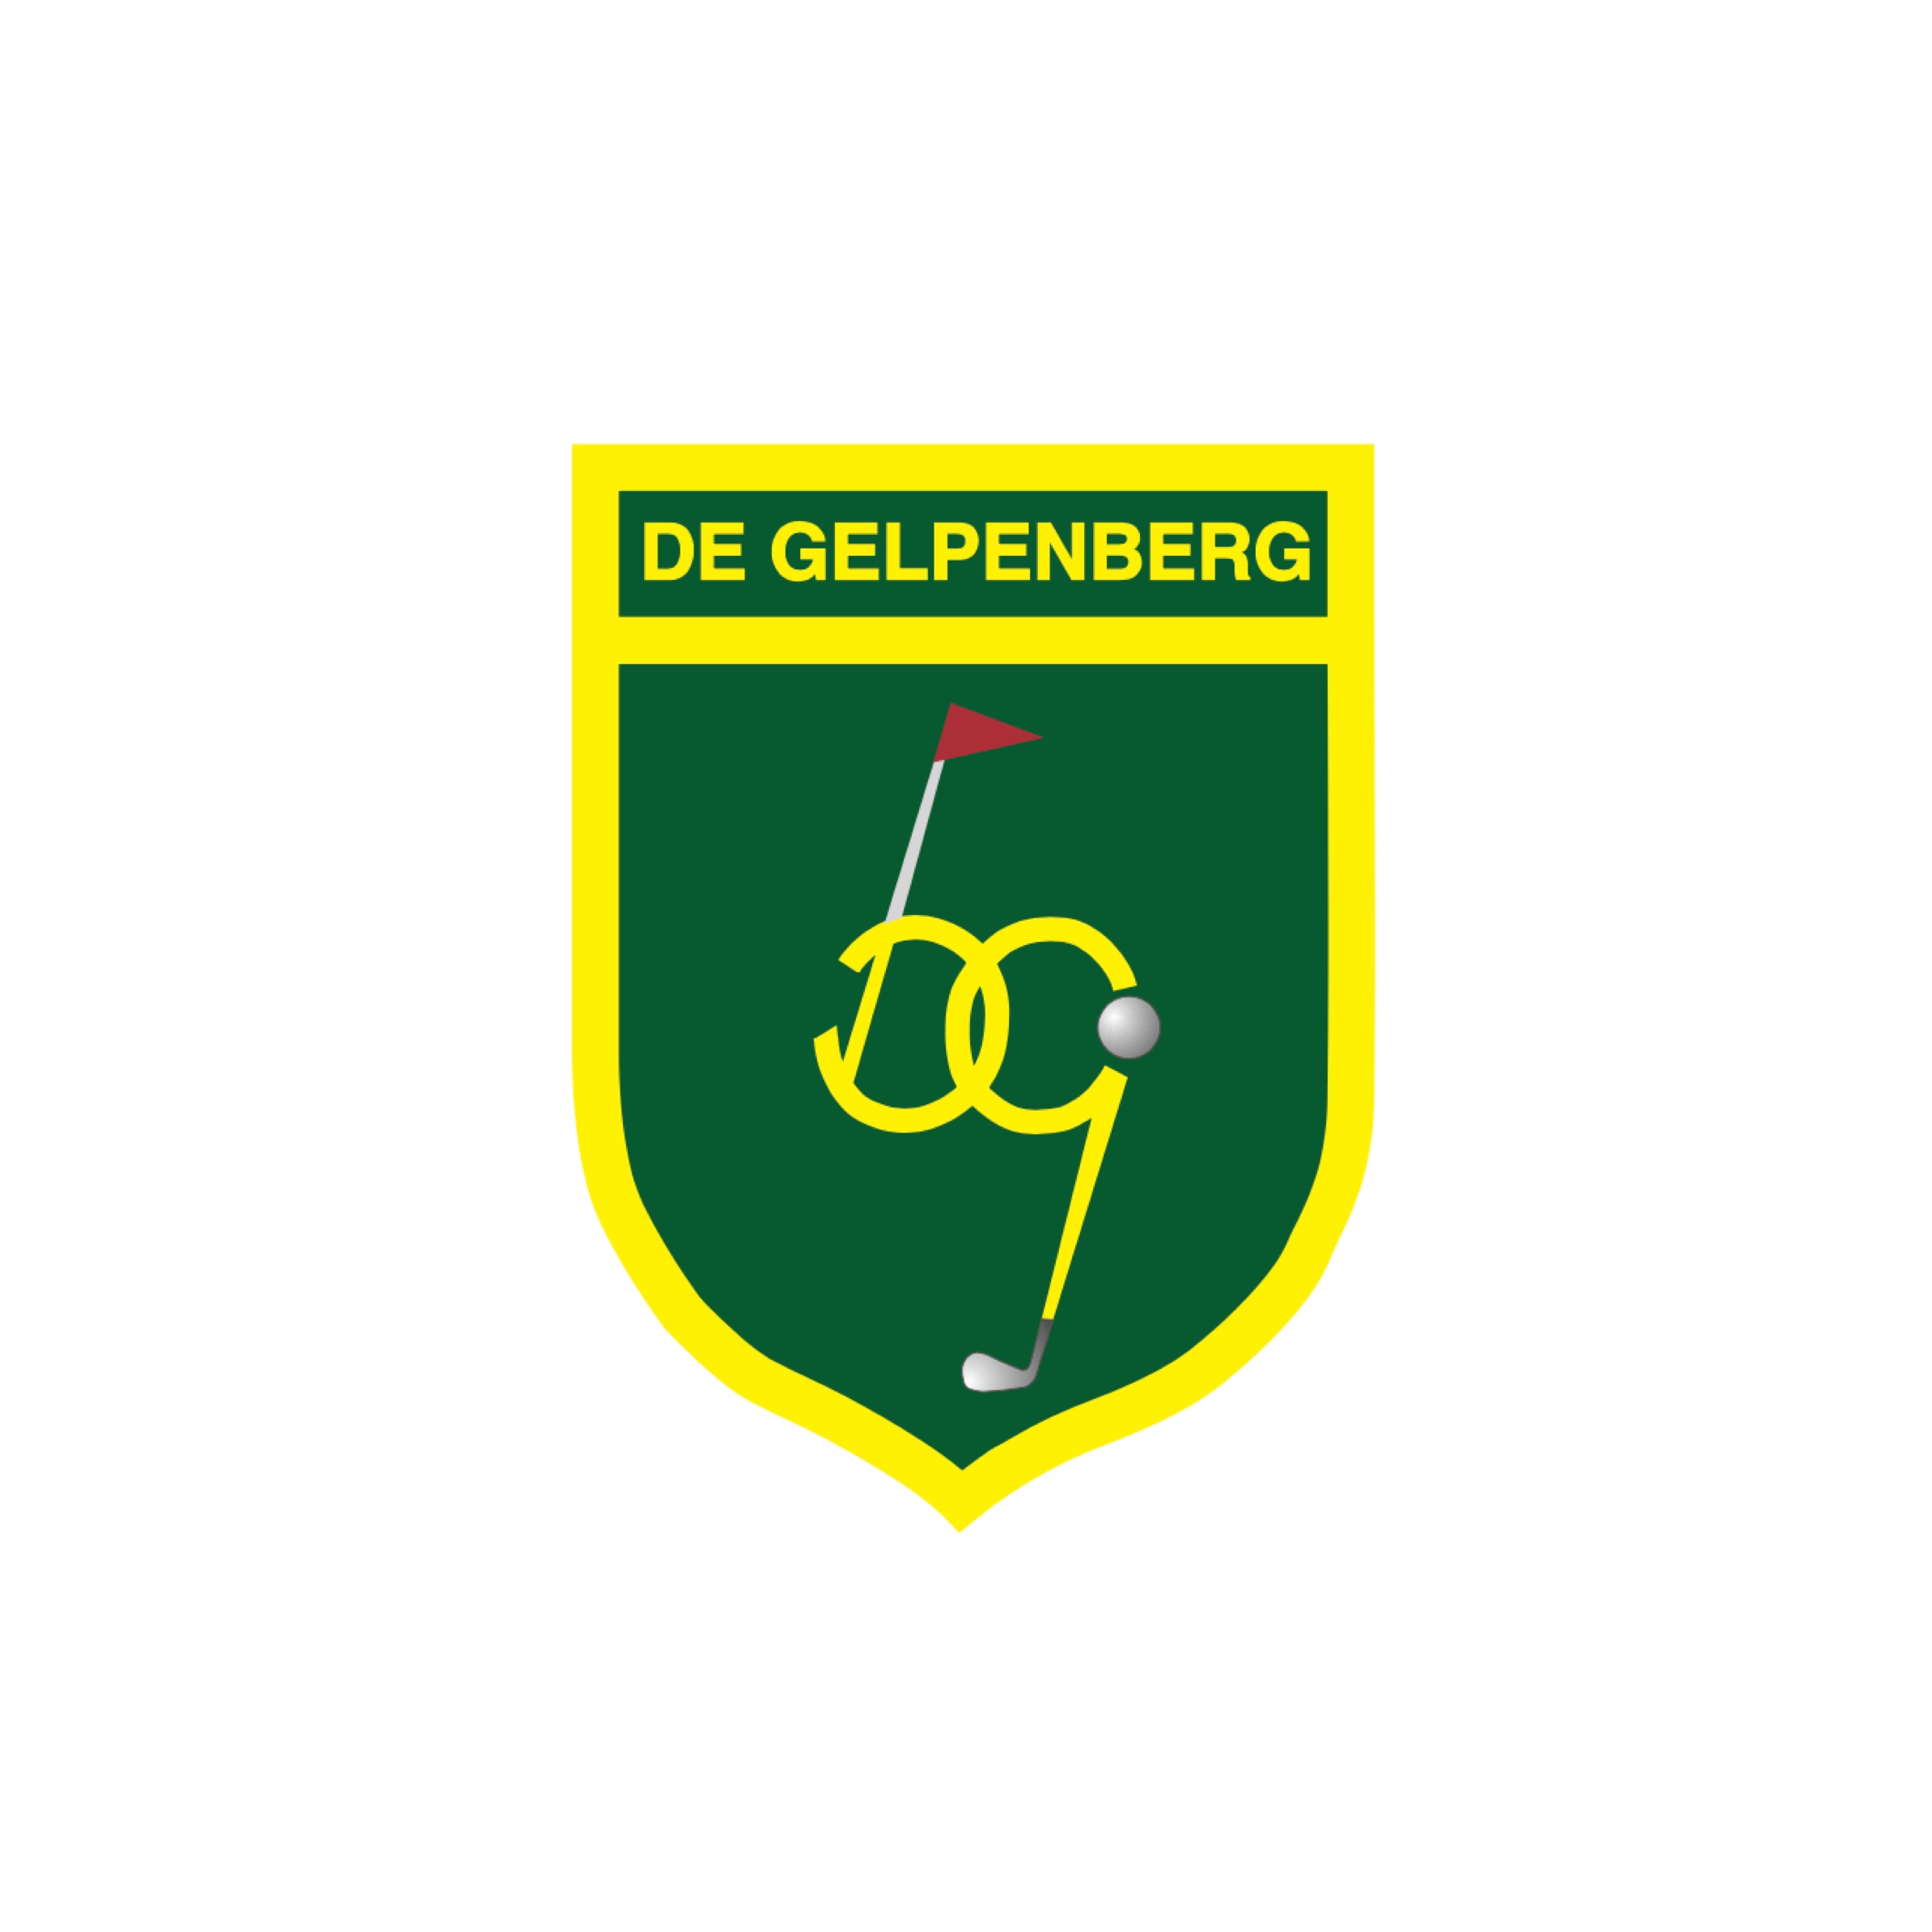 24. Gelpenberg/NL (Drentse Golfclub De Gelpenberg)